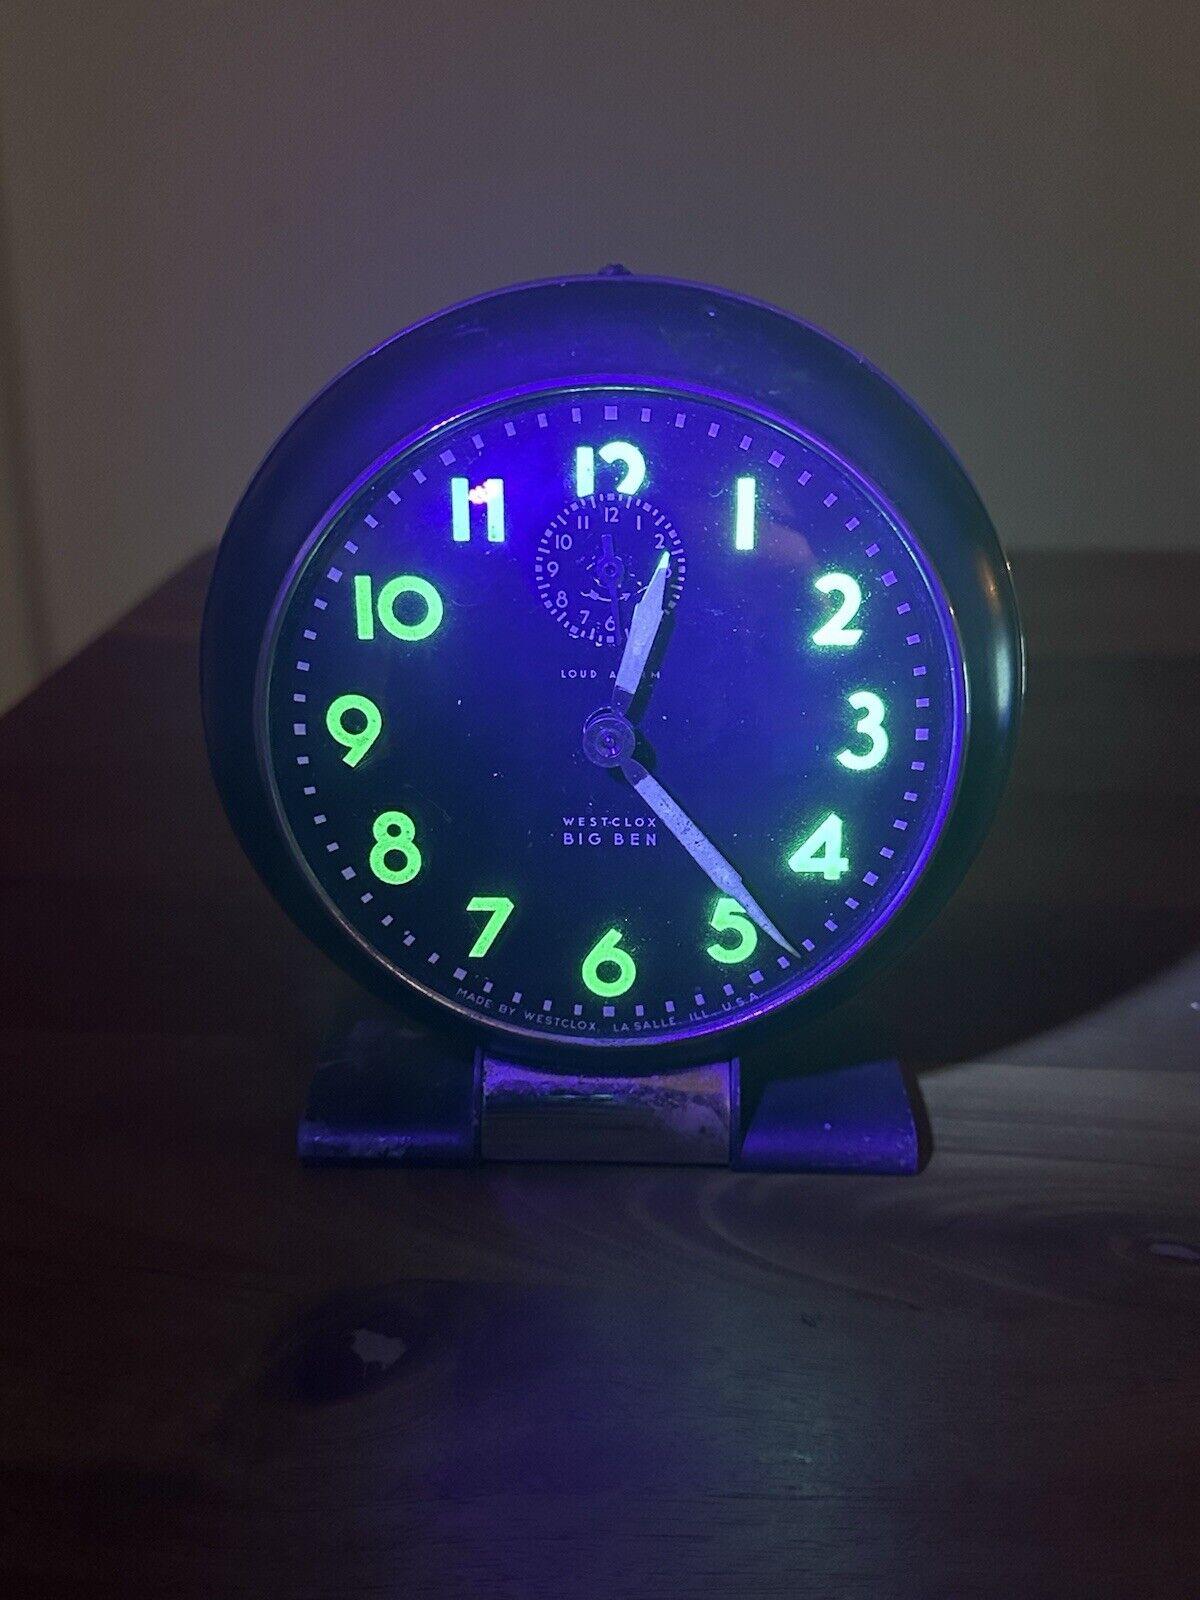 Westclox Big Ben Uranium Alarm Clock